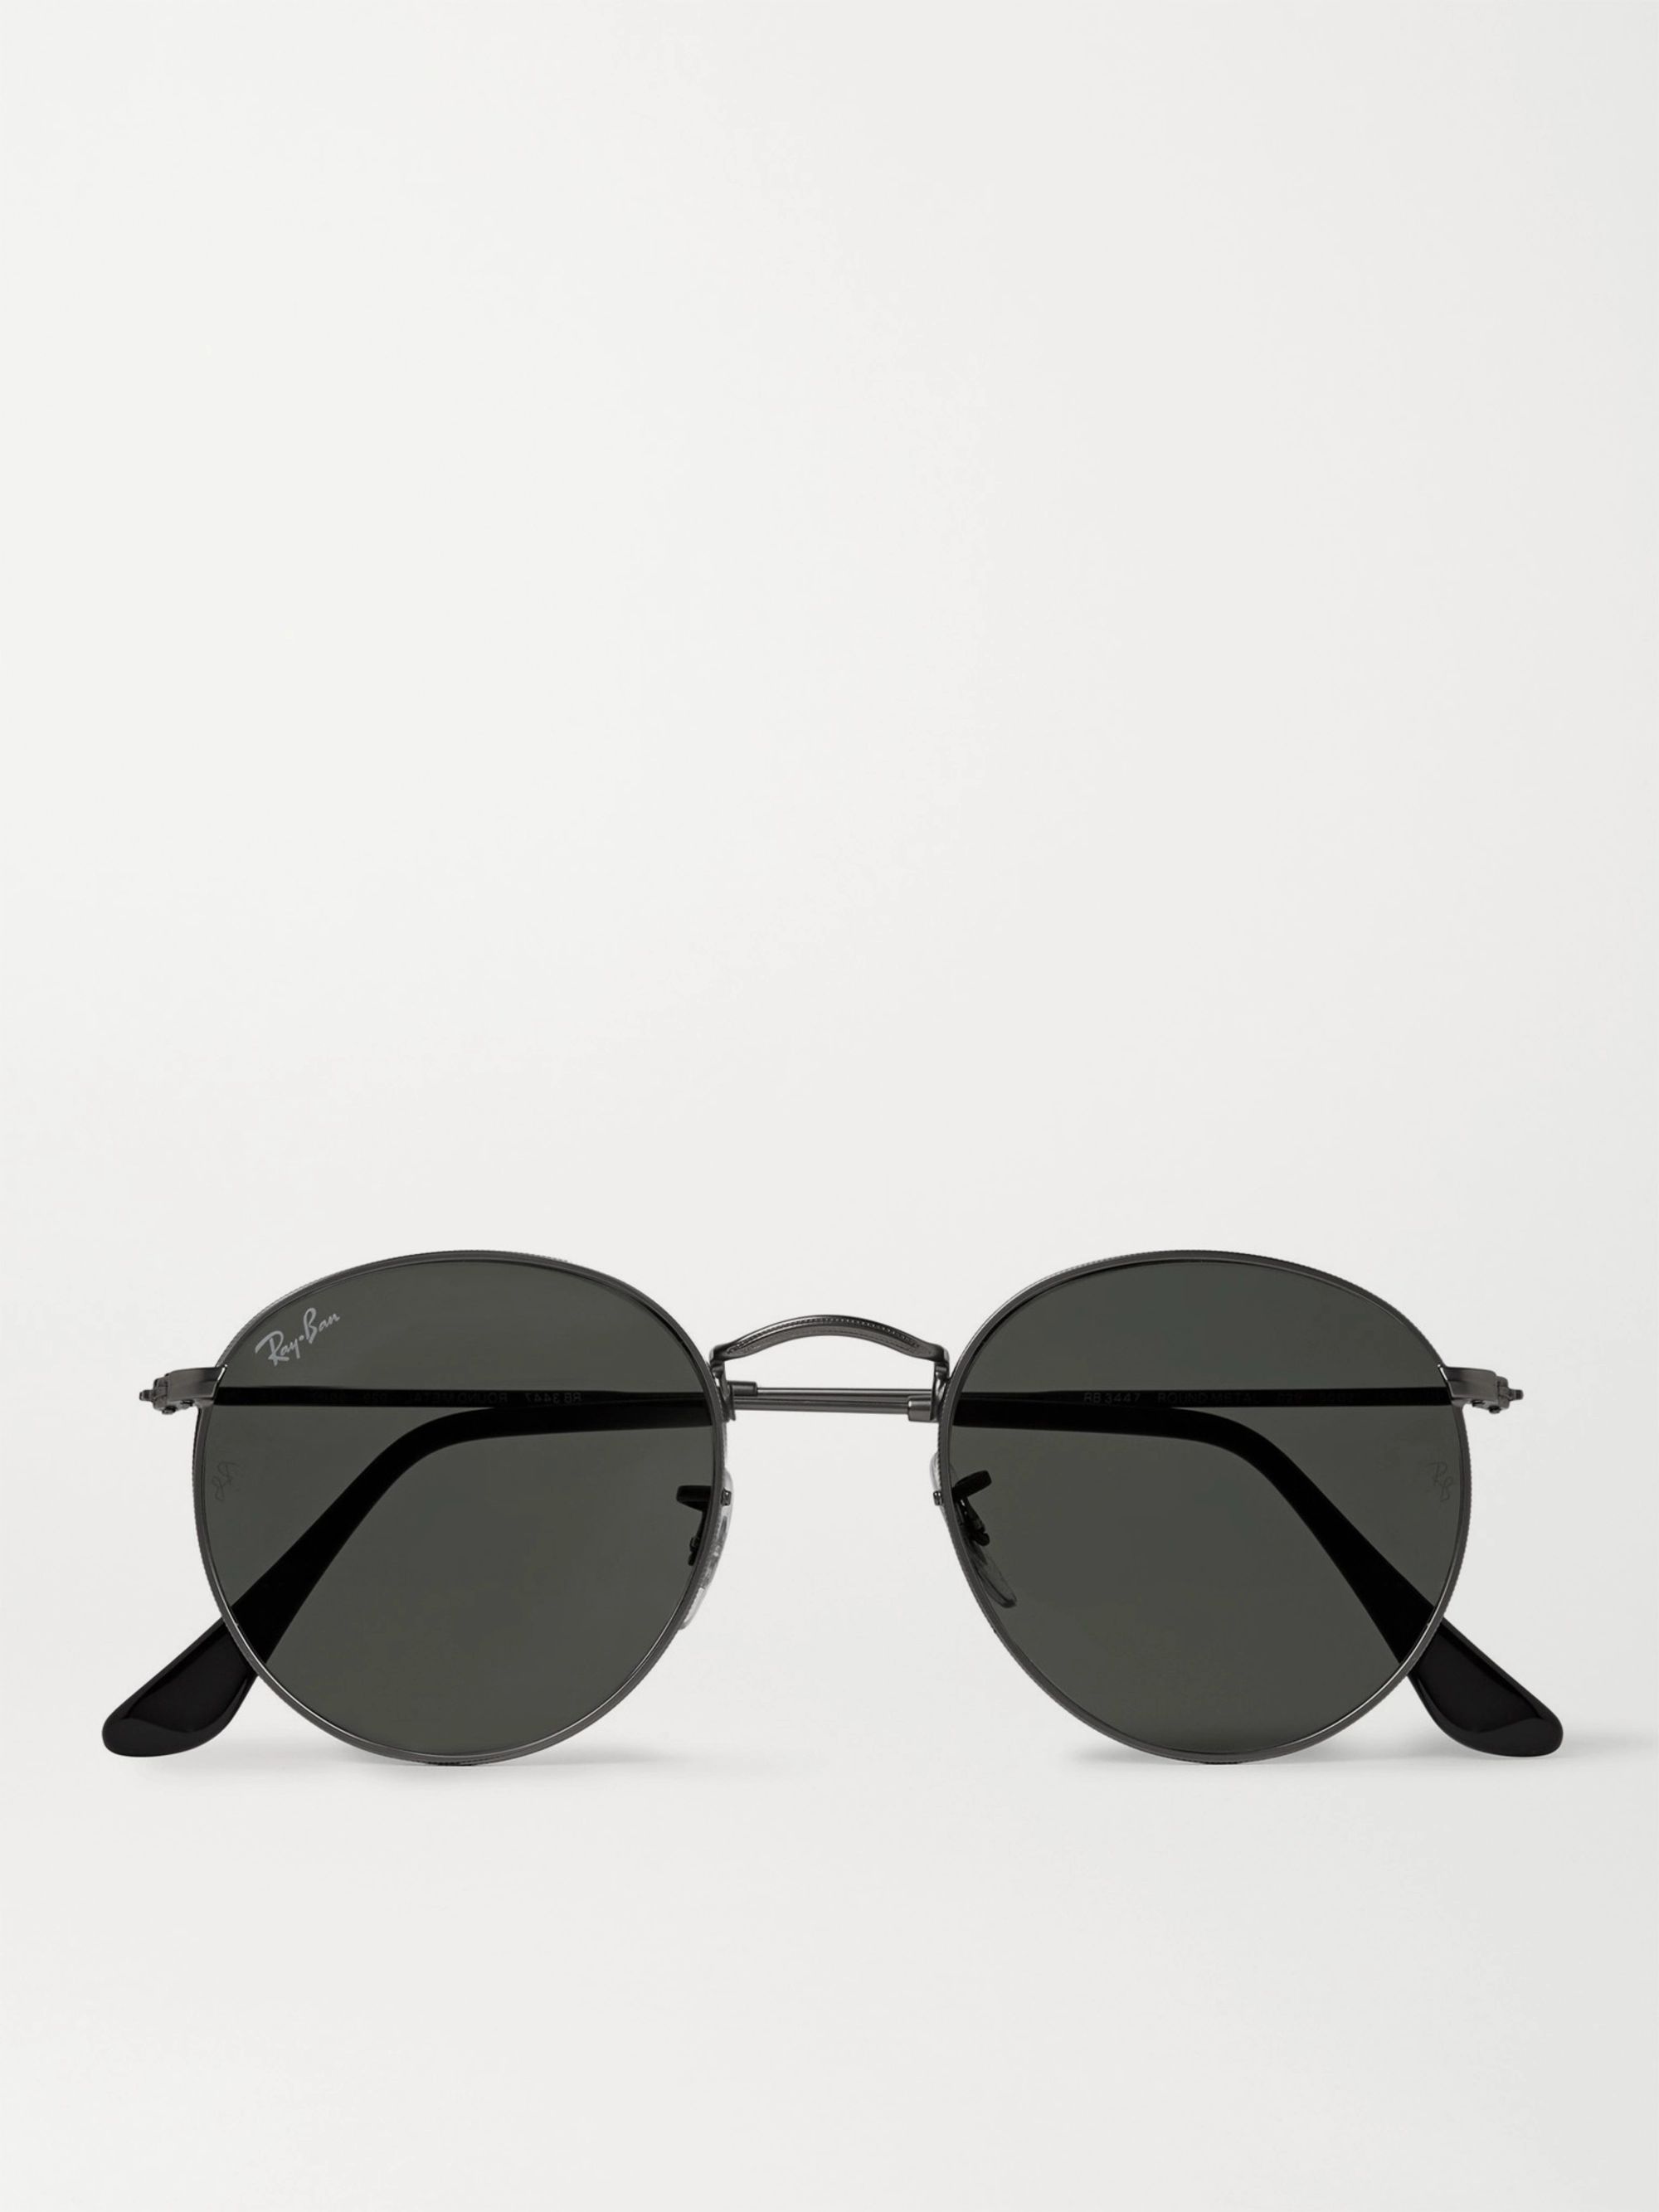 ray ban sunglasses round black